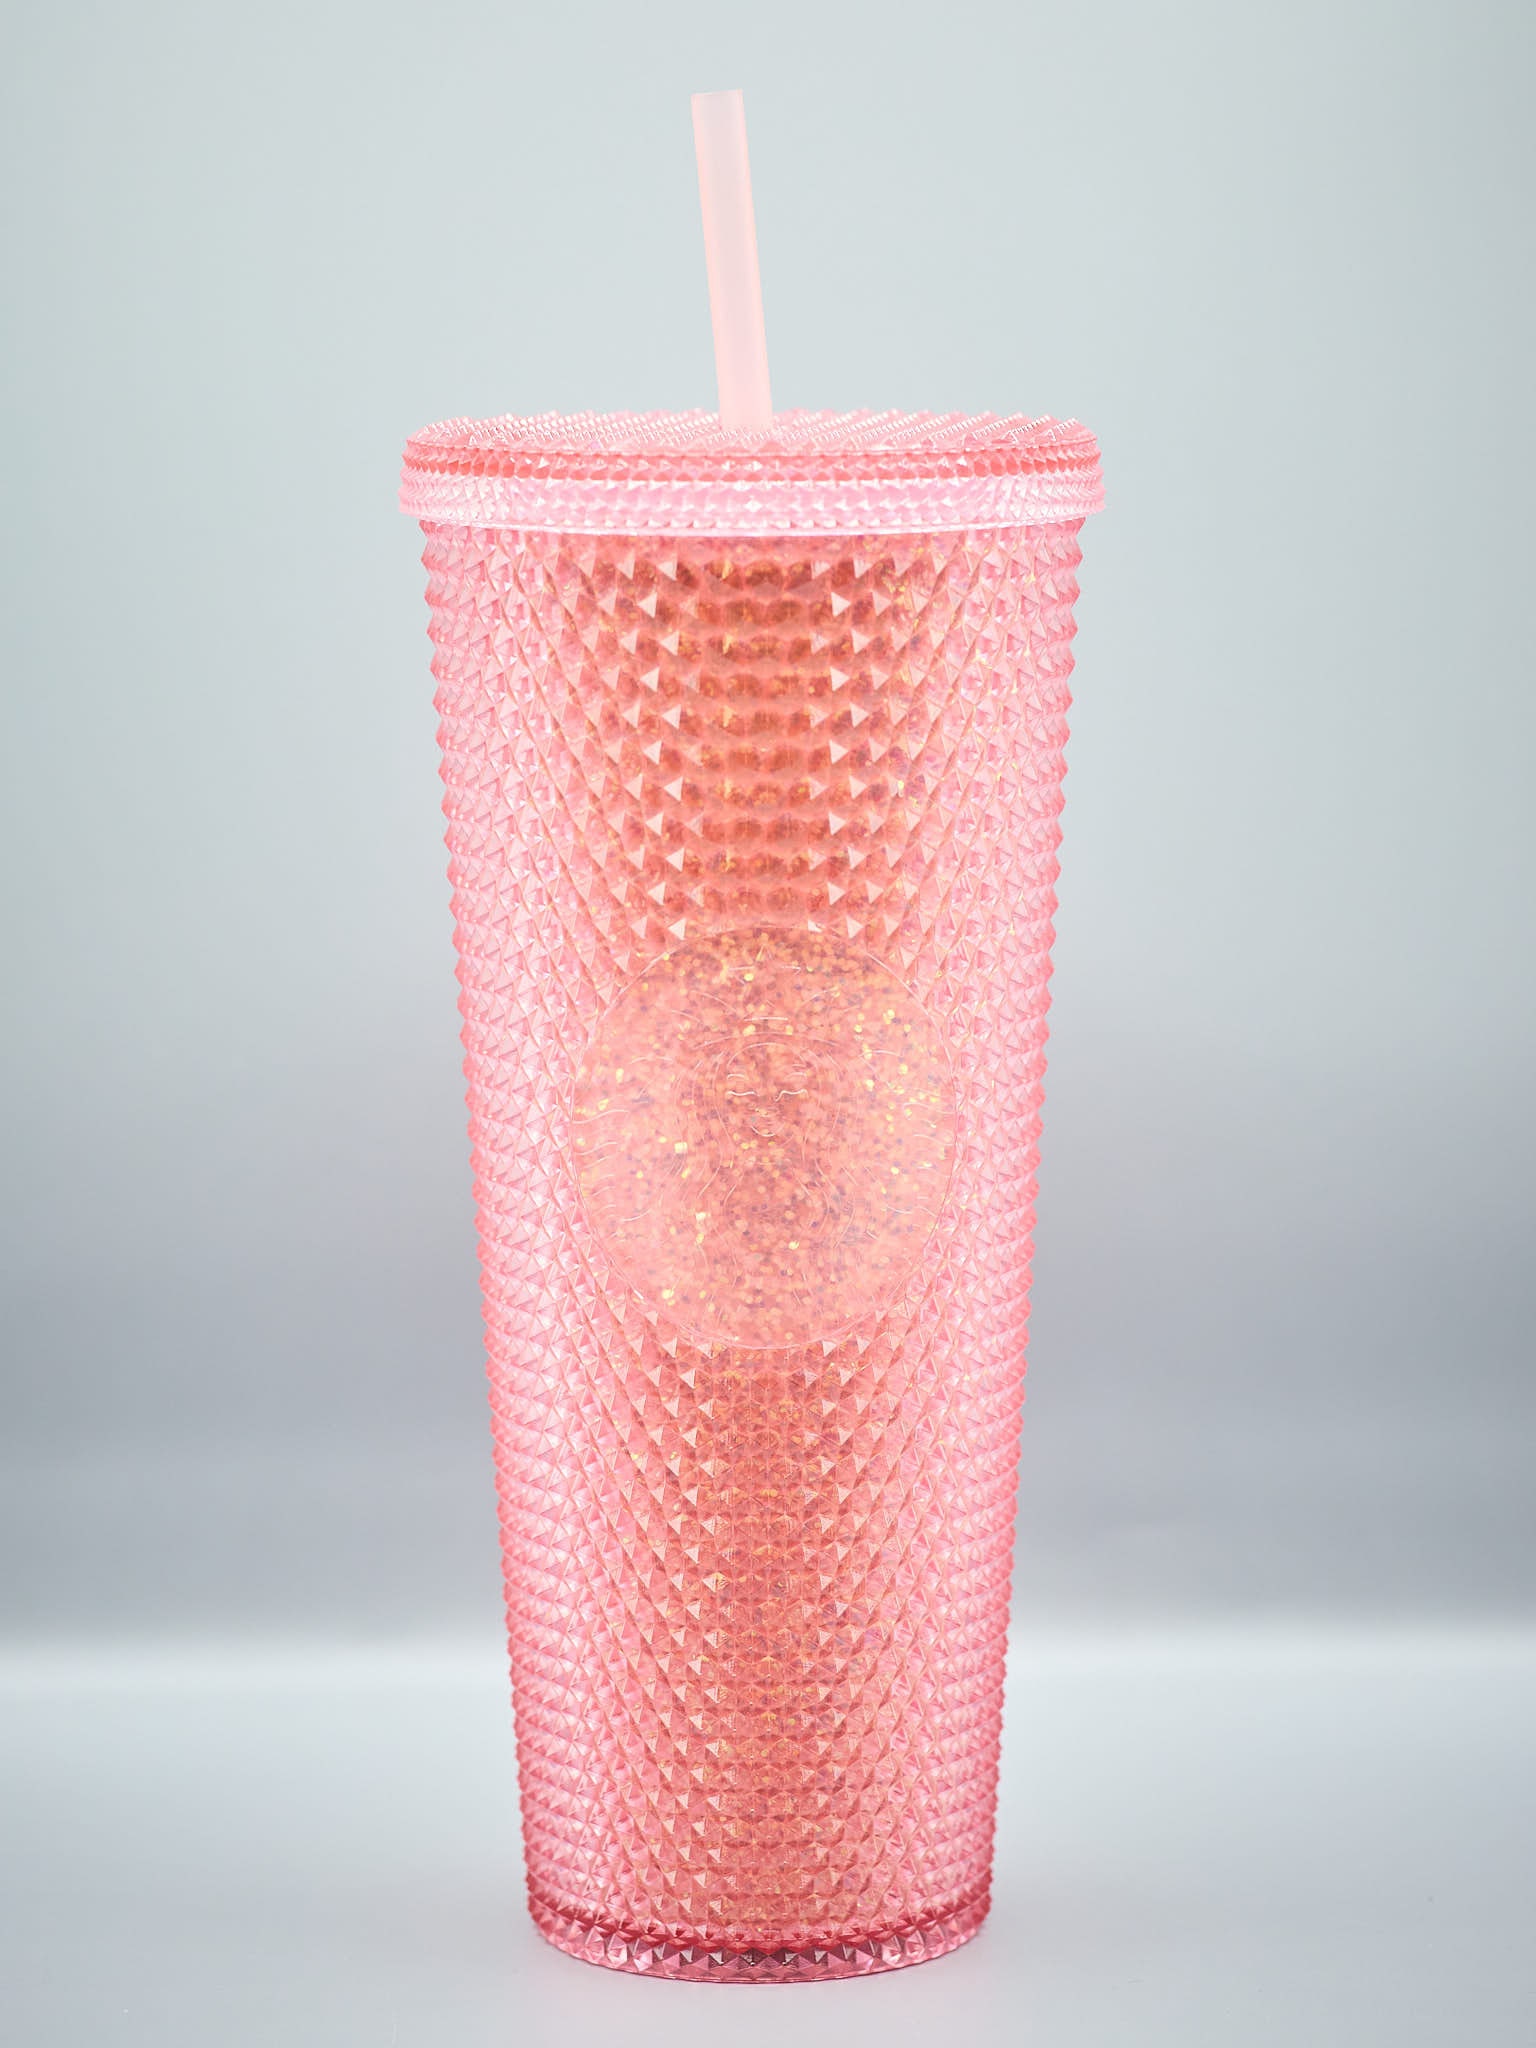 Hot Starbucks Cute Pink Matte Diamond Studded Tumbler Cold Cups